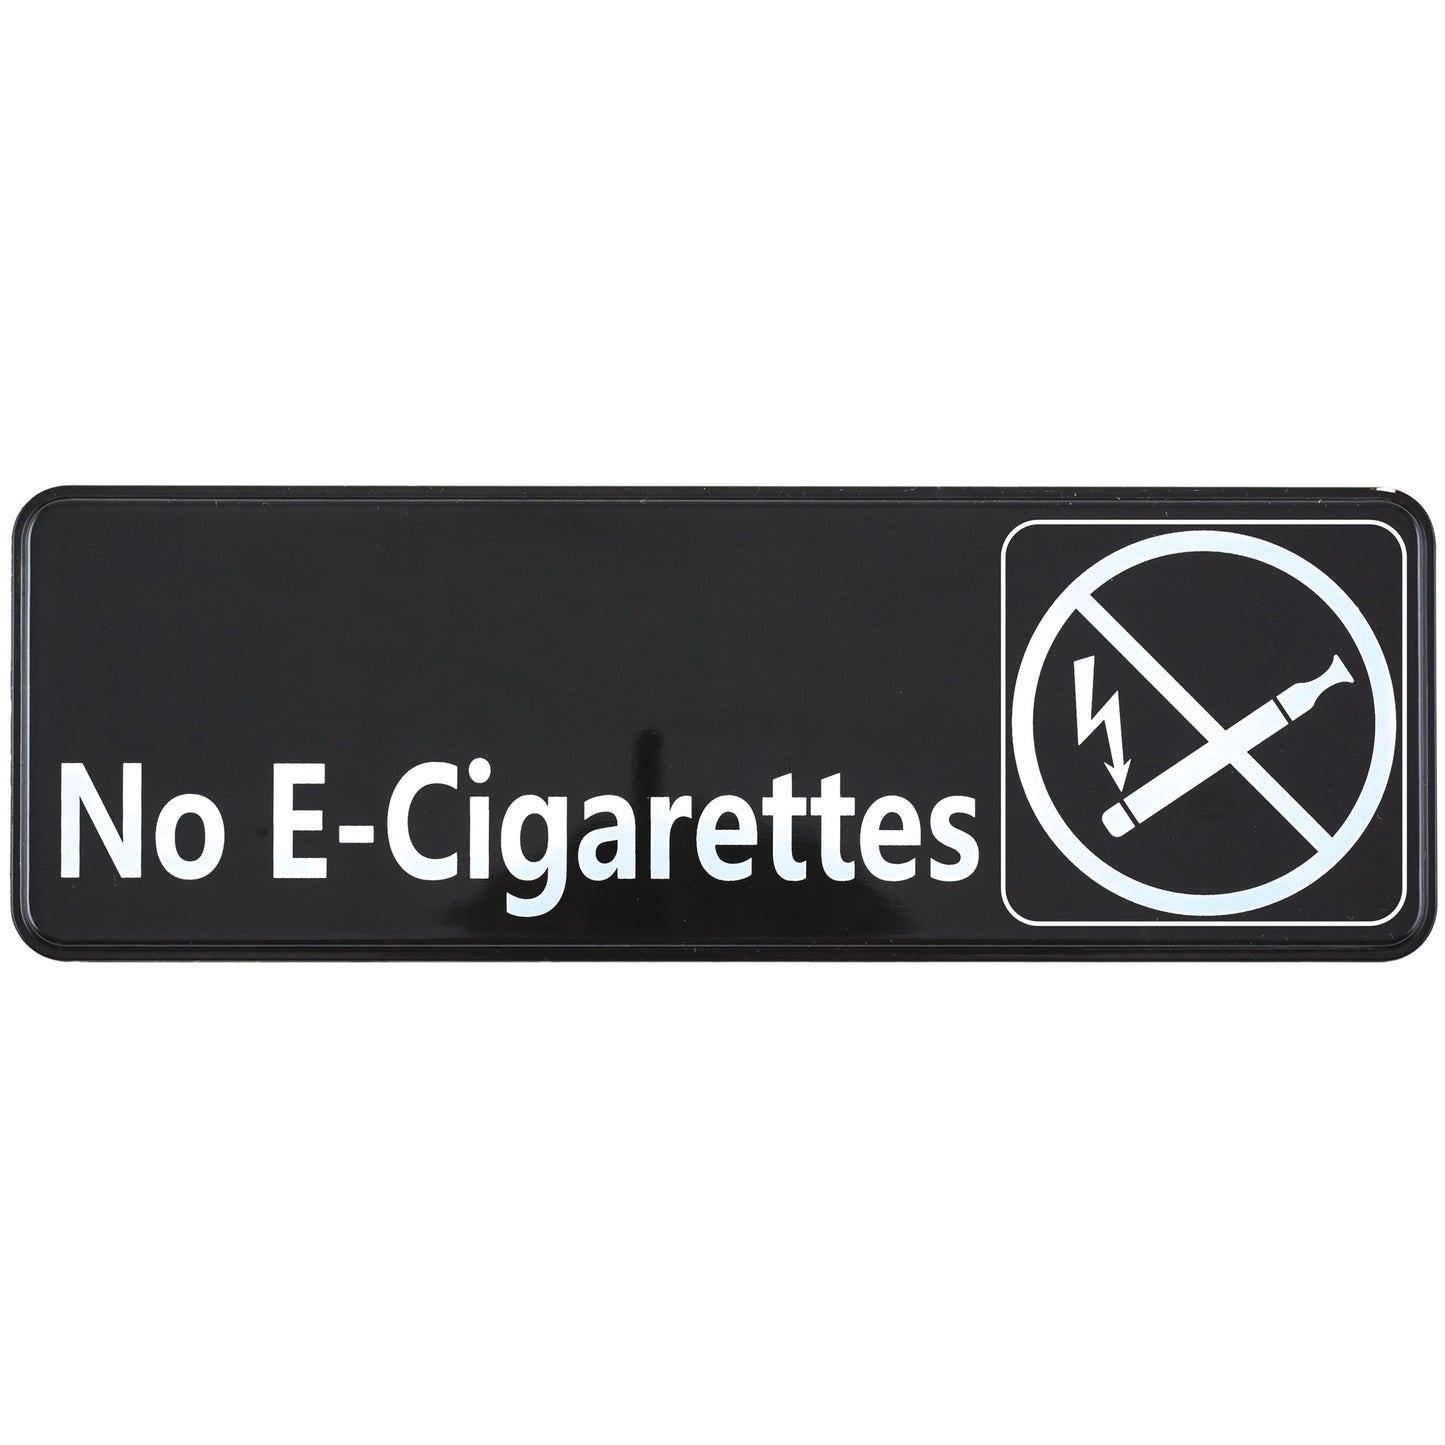 SGN-335 - Information Signs, 9"W x 3"H - SGN-335 - No E-Cigarettes